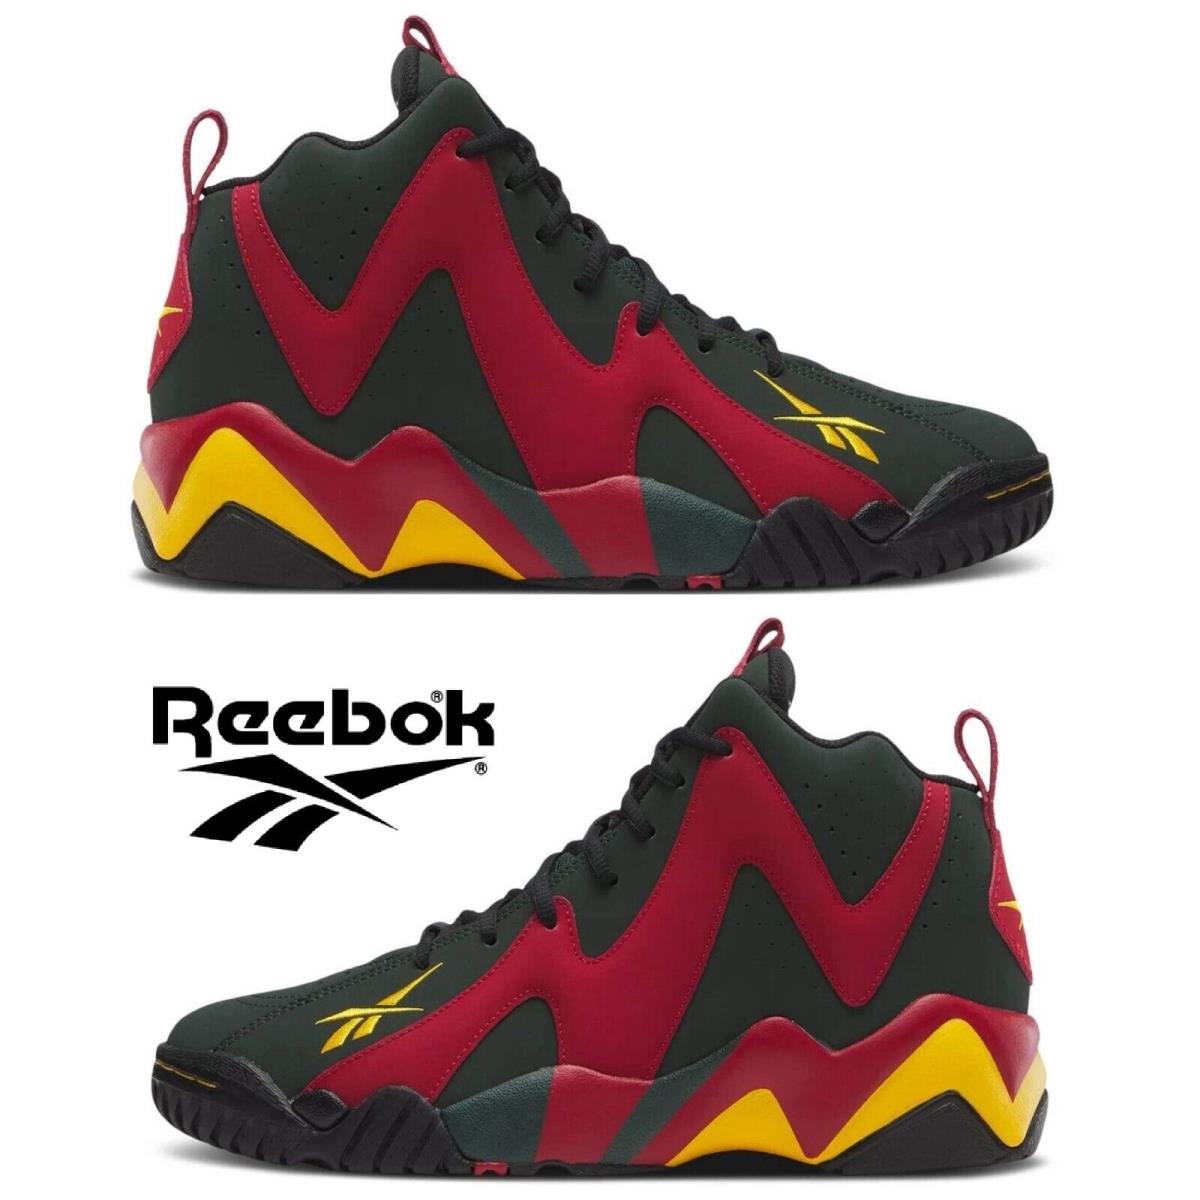 Reebok Hurrikaze II Basketball Shoes Men`s Sneakers Running Casual Sport Black